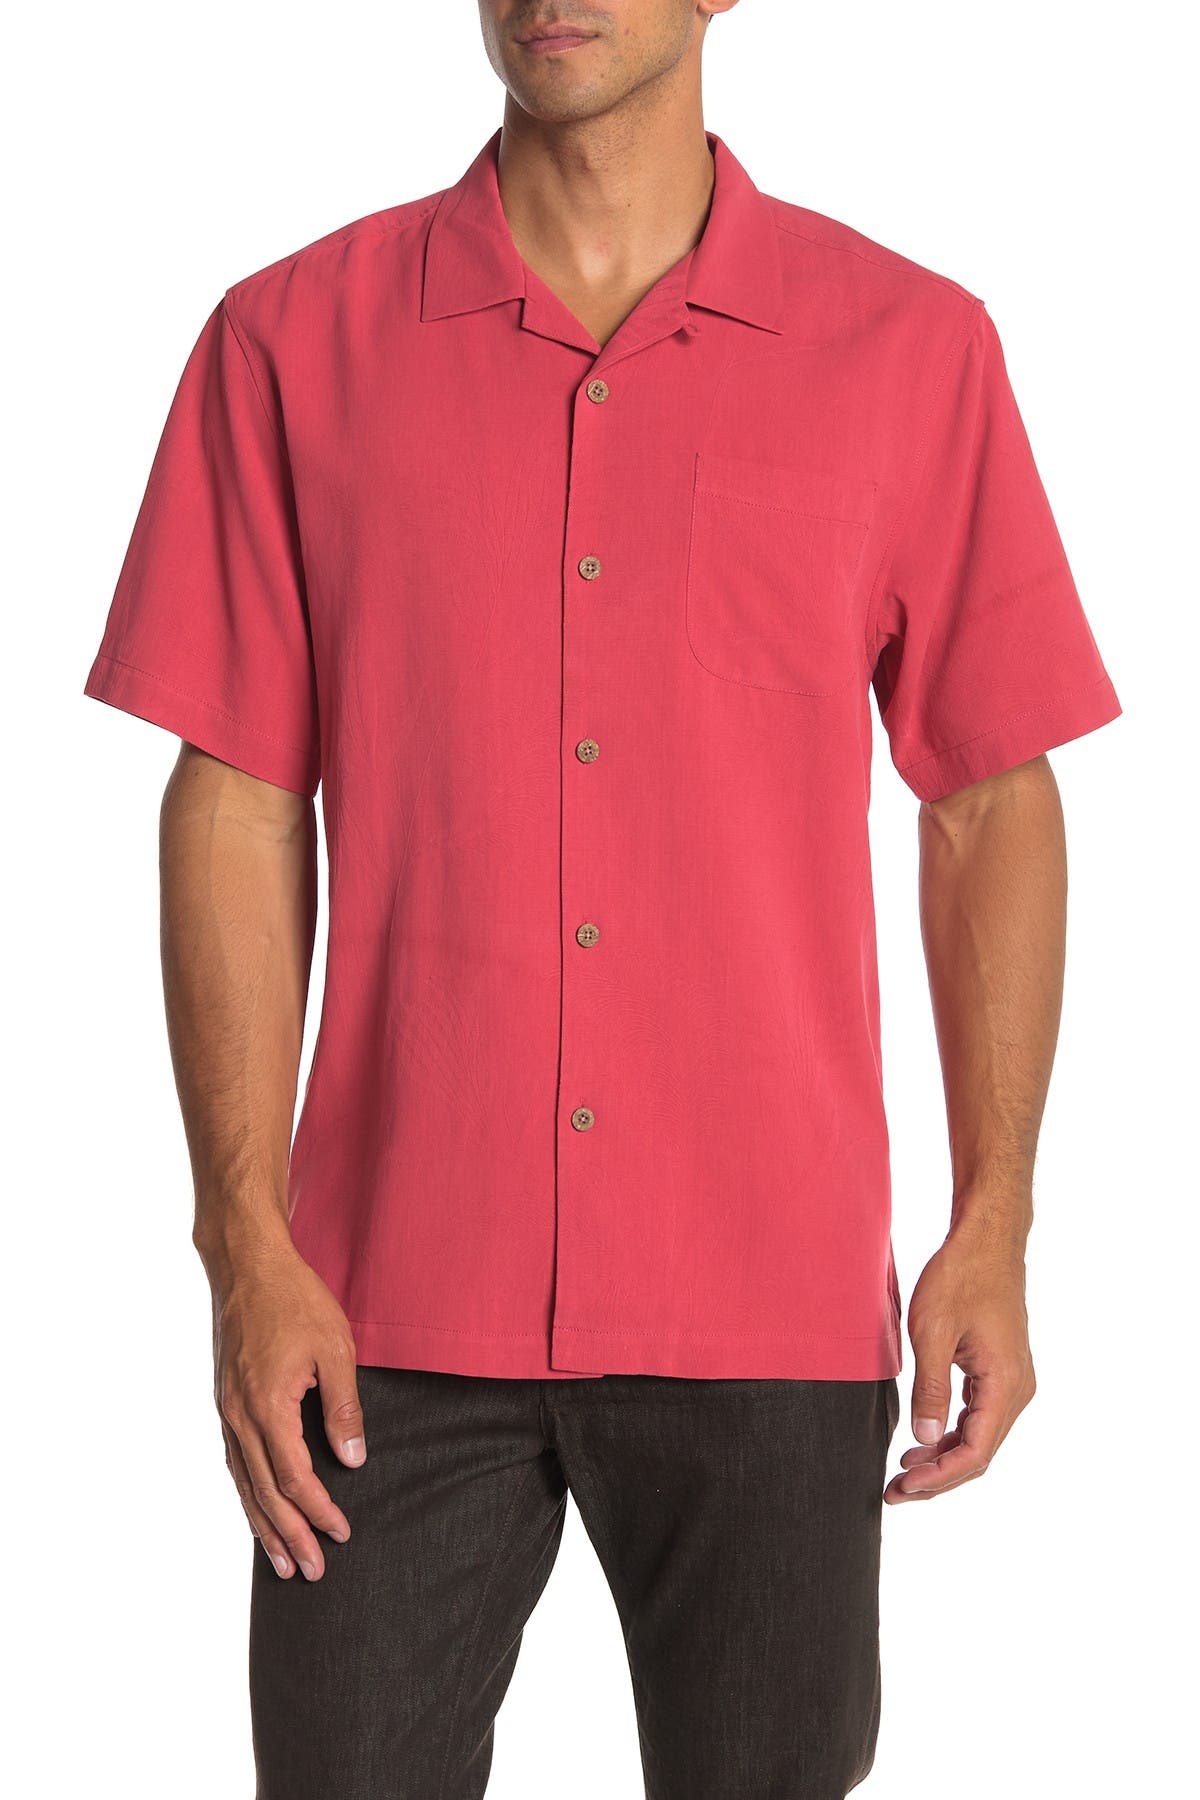 tommy bahama men's weekend tropics silk shirt